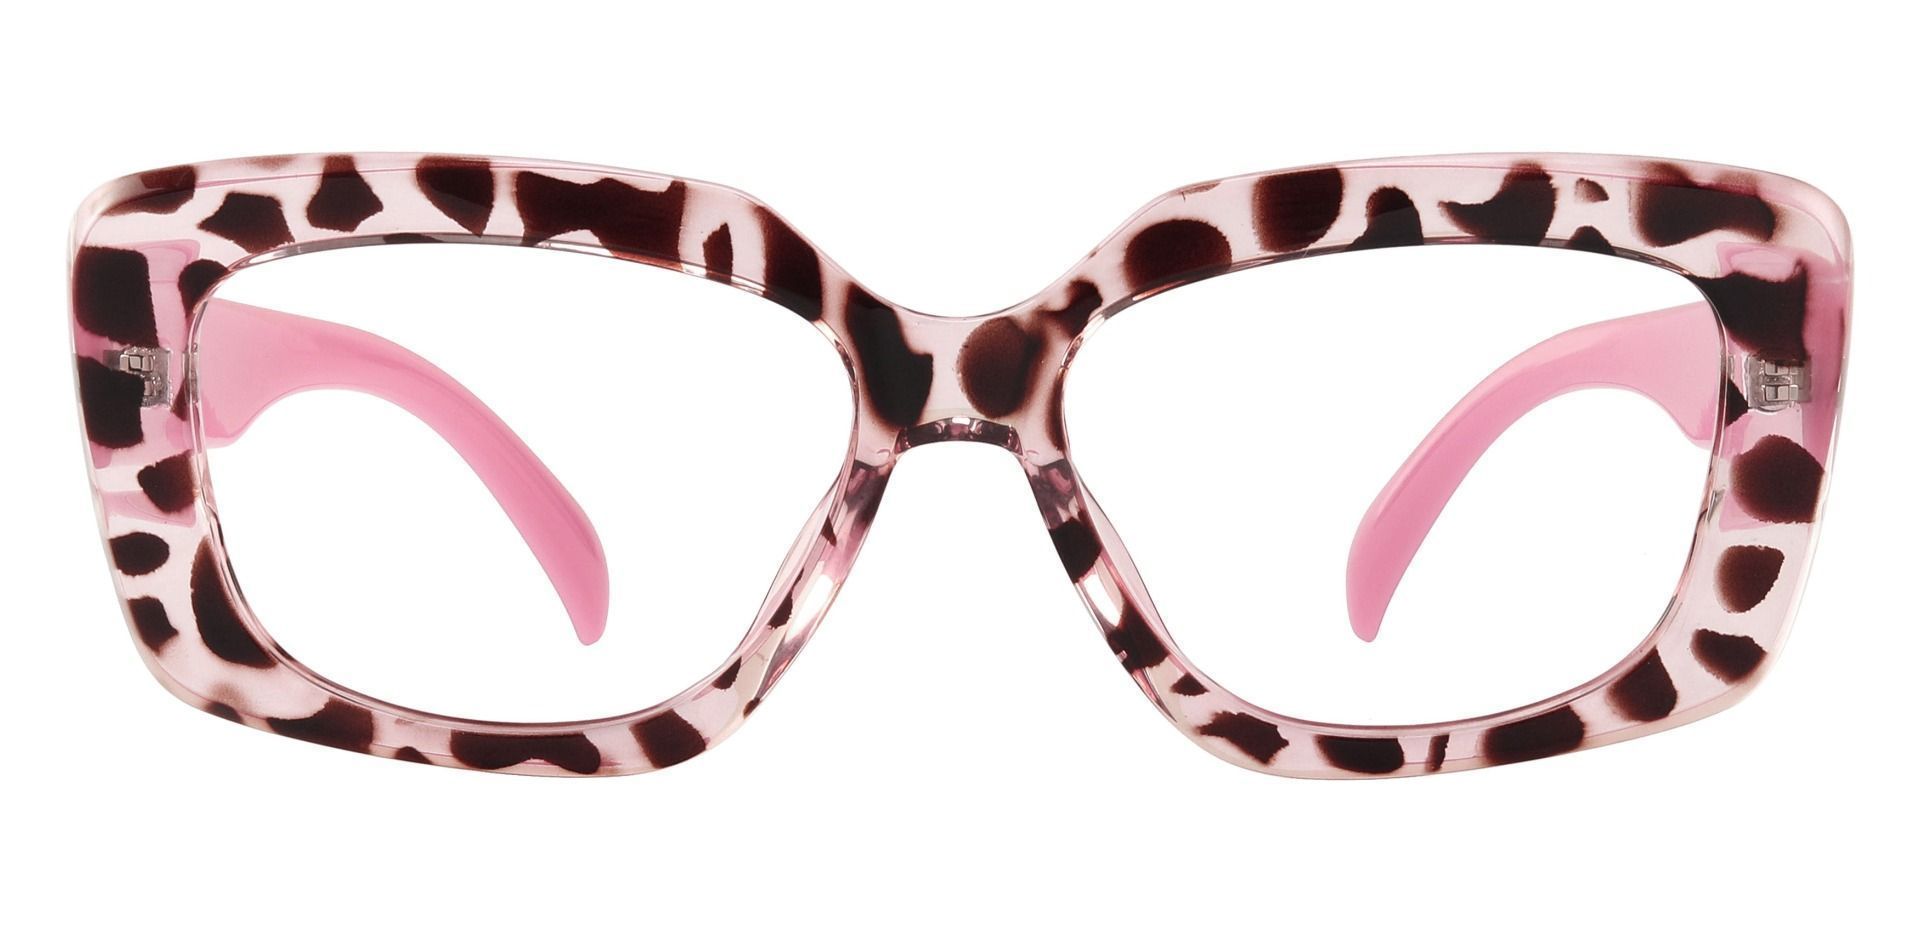 Chandler Rectangle Prescription Glasses - Leopard/Pink Temples